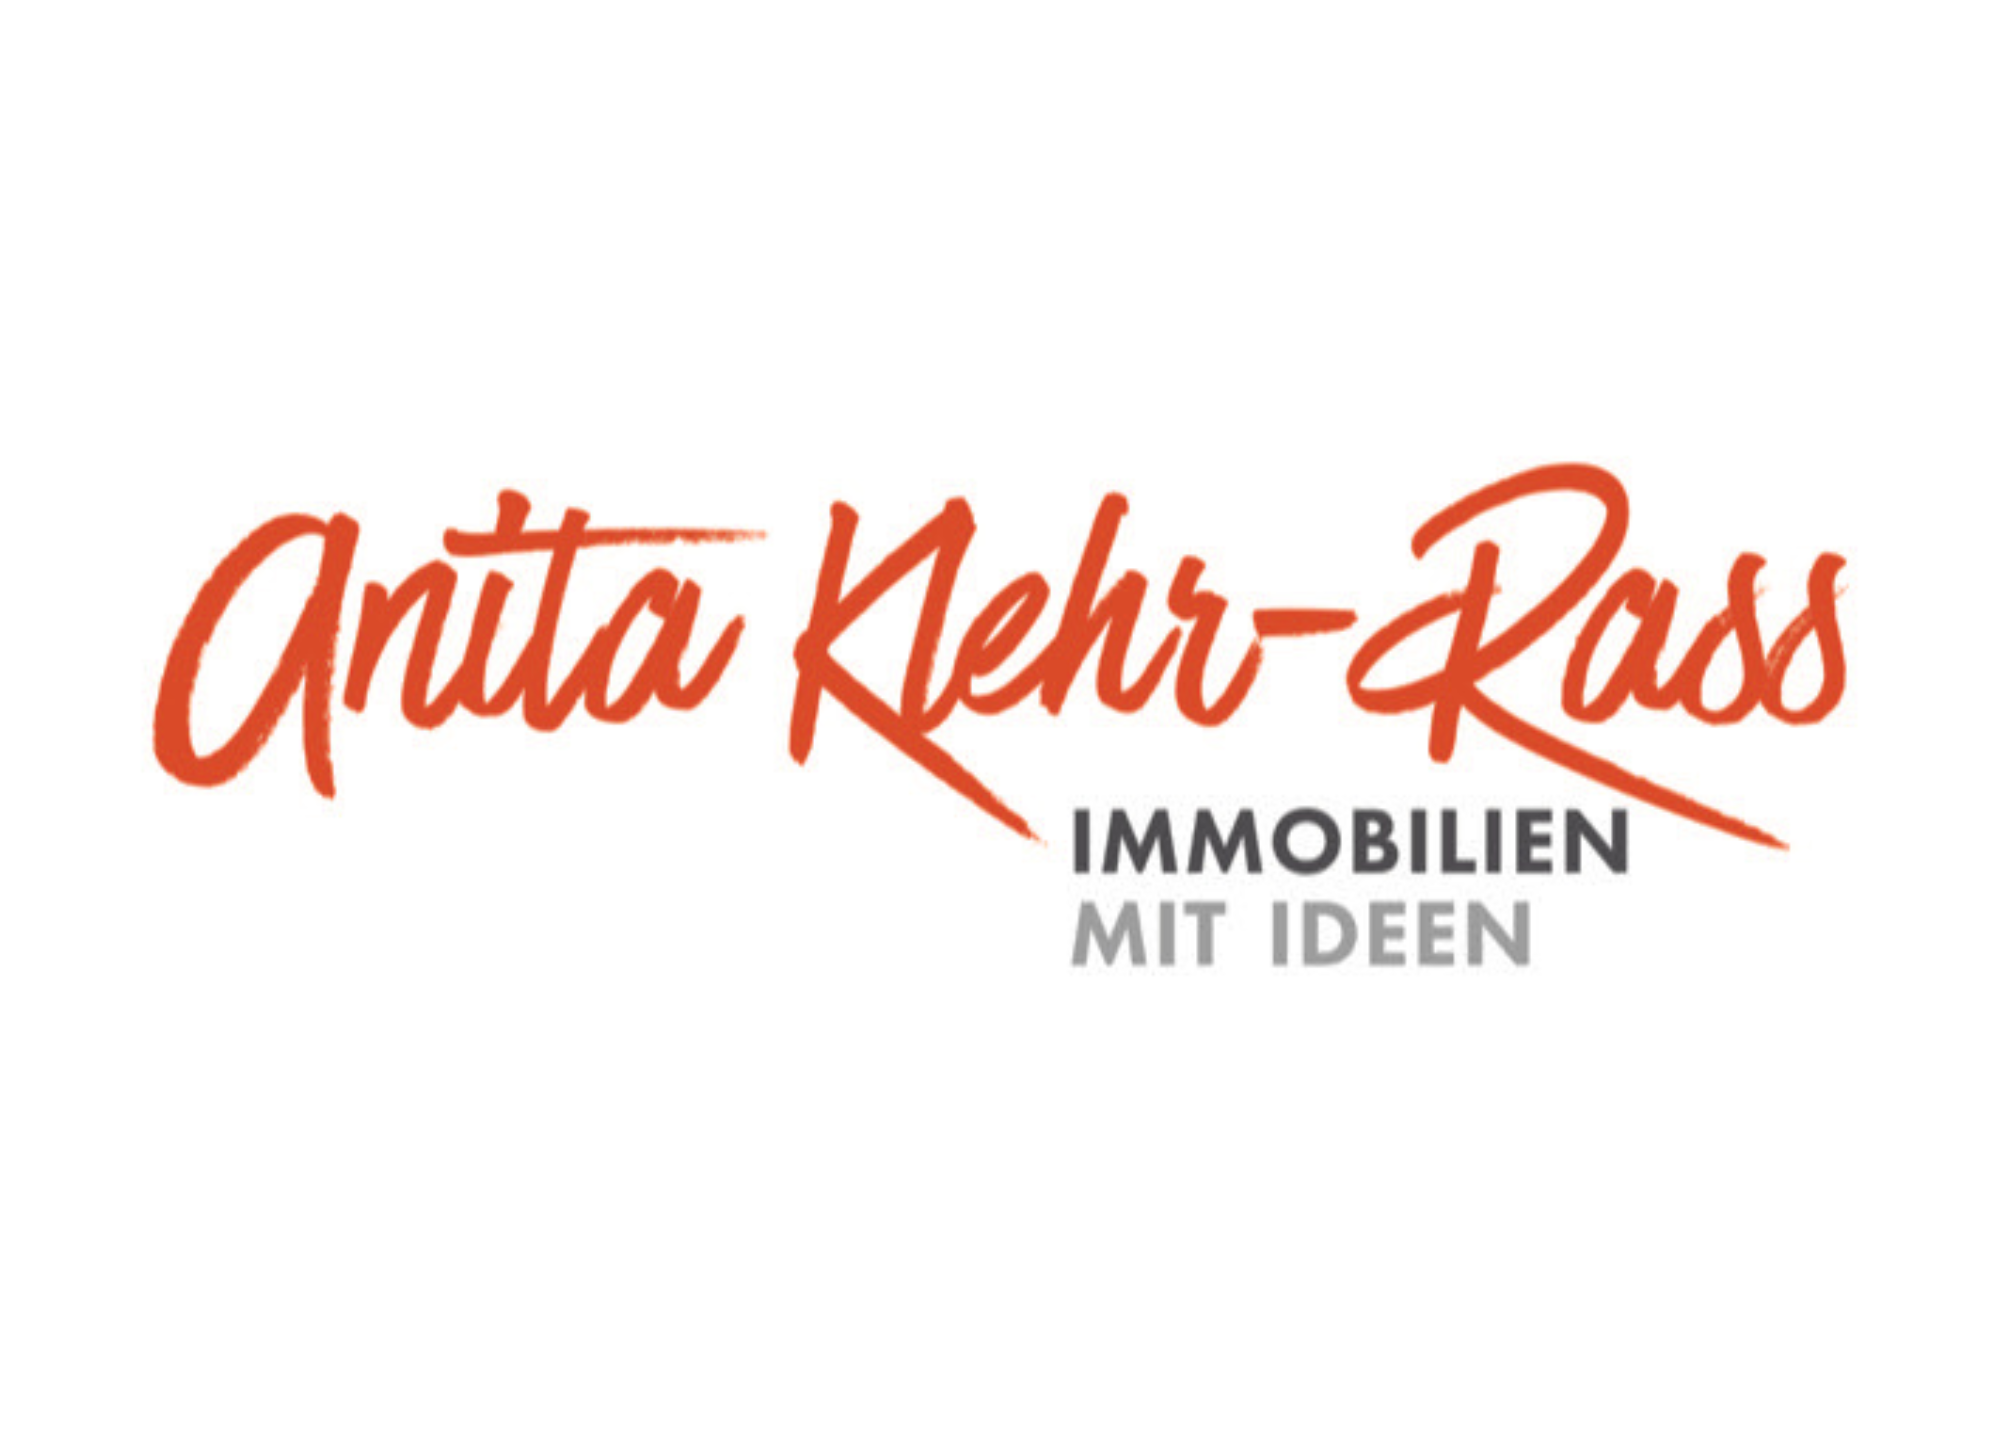 Anita Klehr-Rass Immobilien